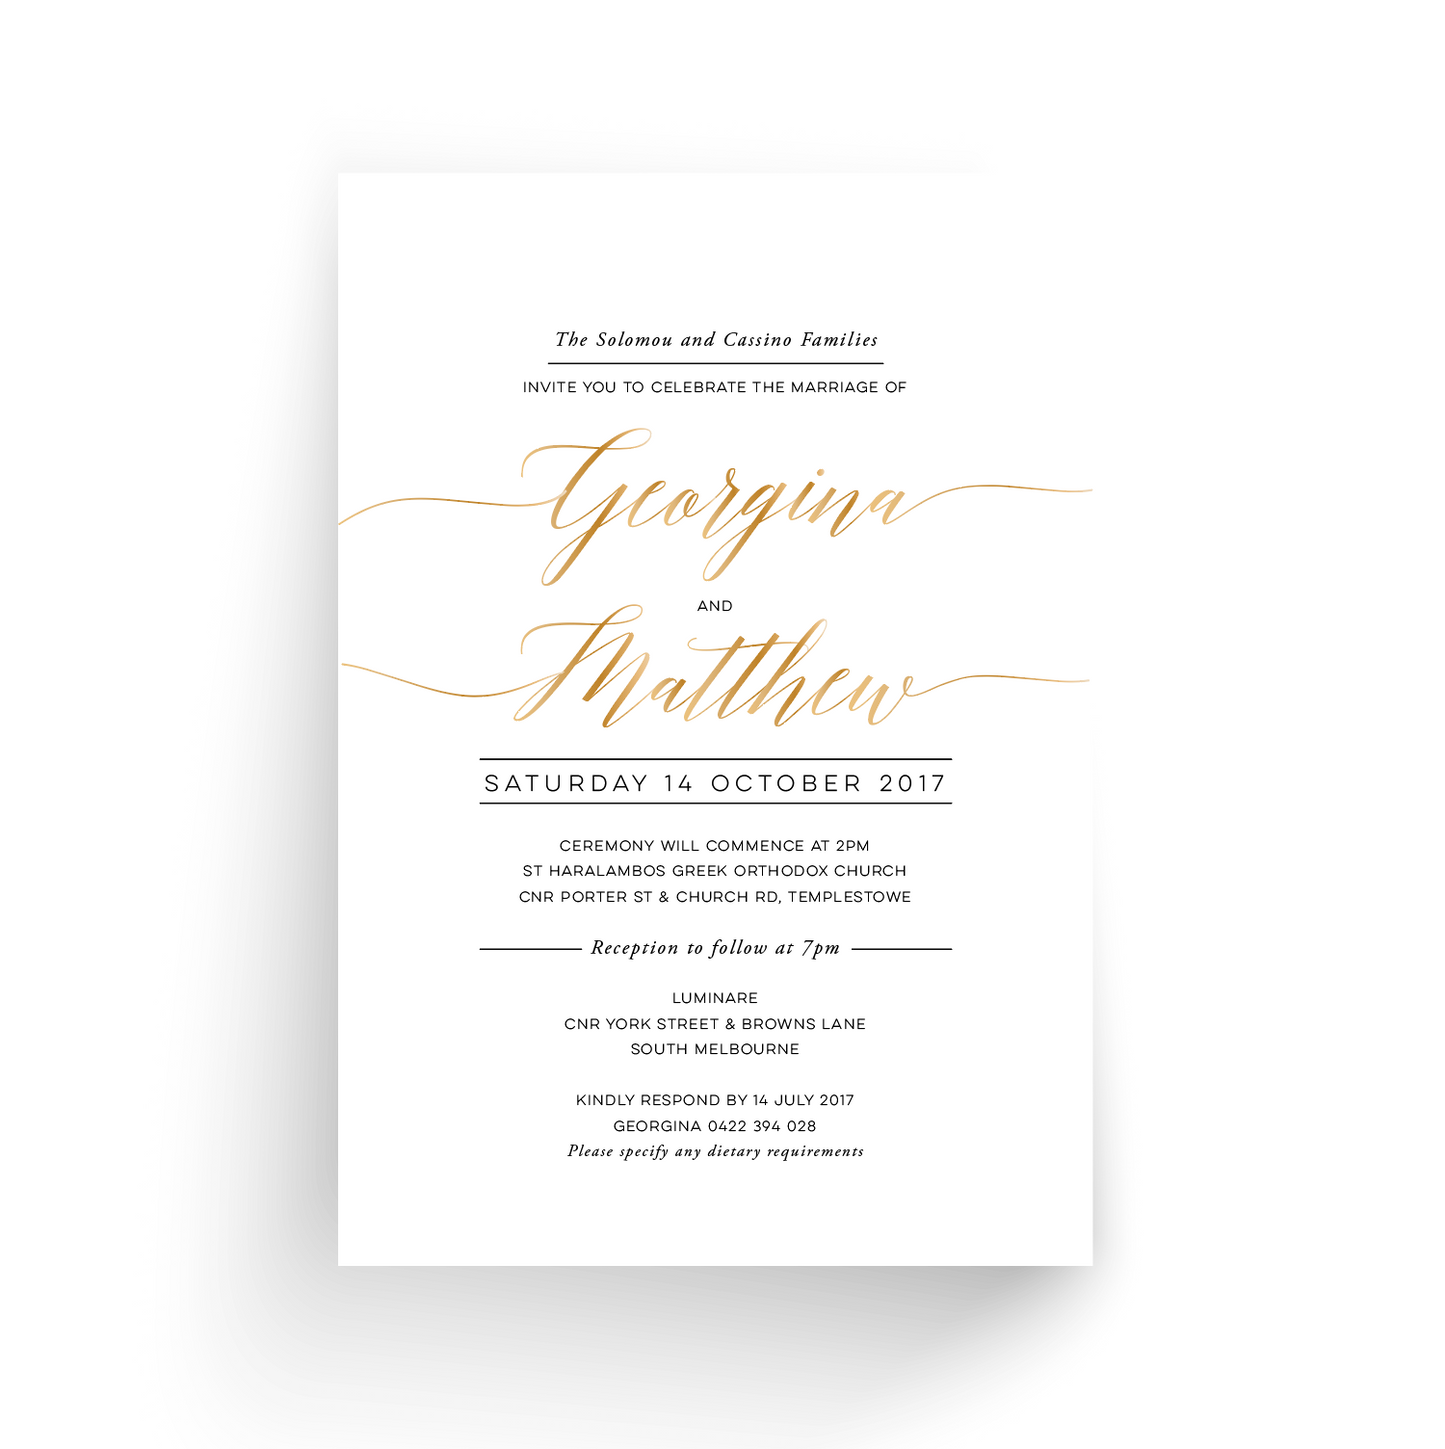 'Georgina' Wedding Invitation